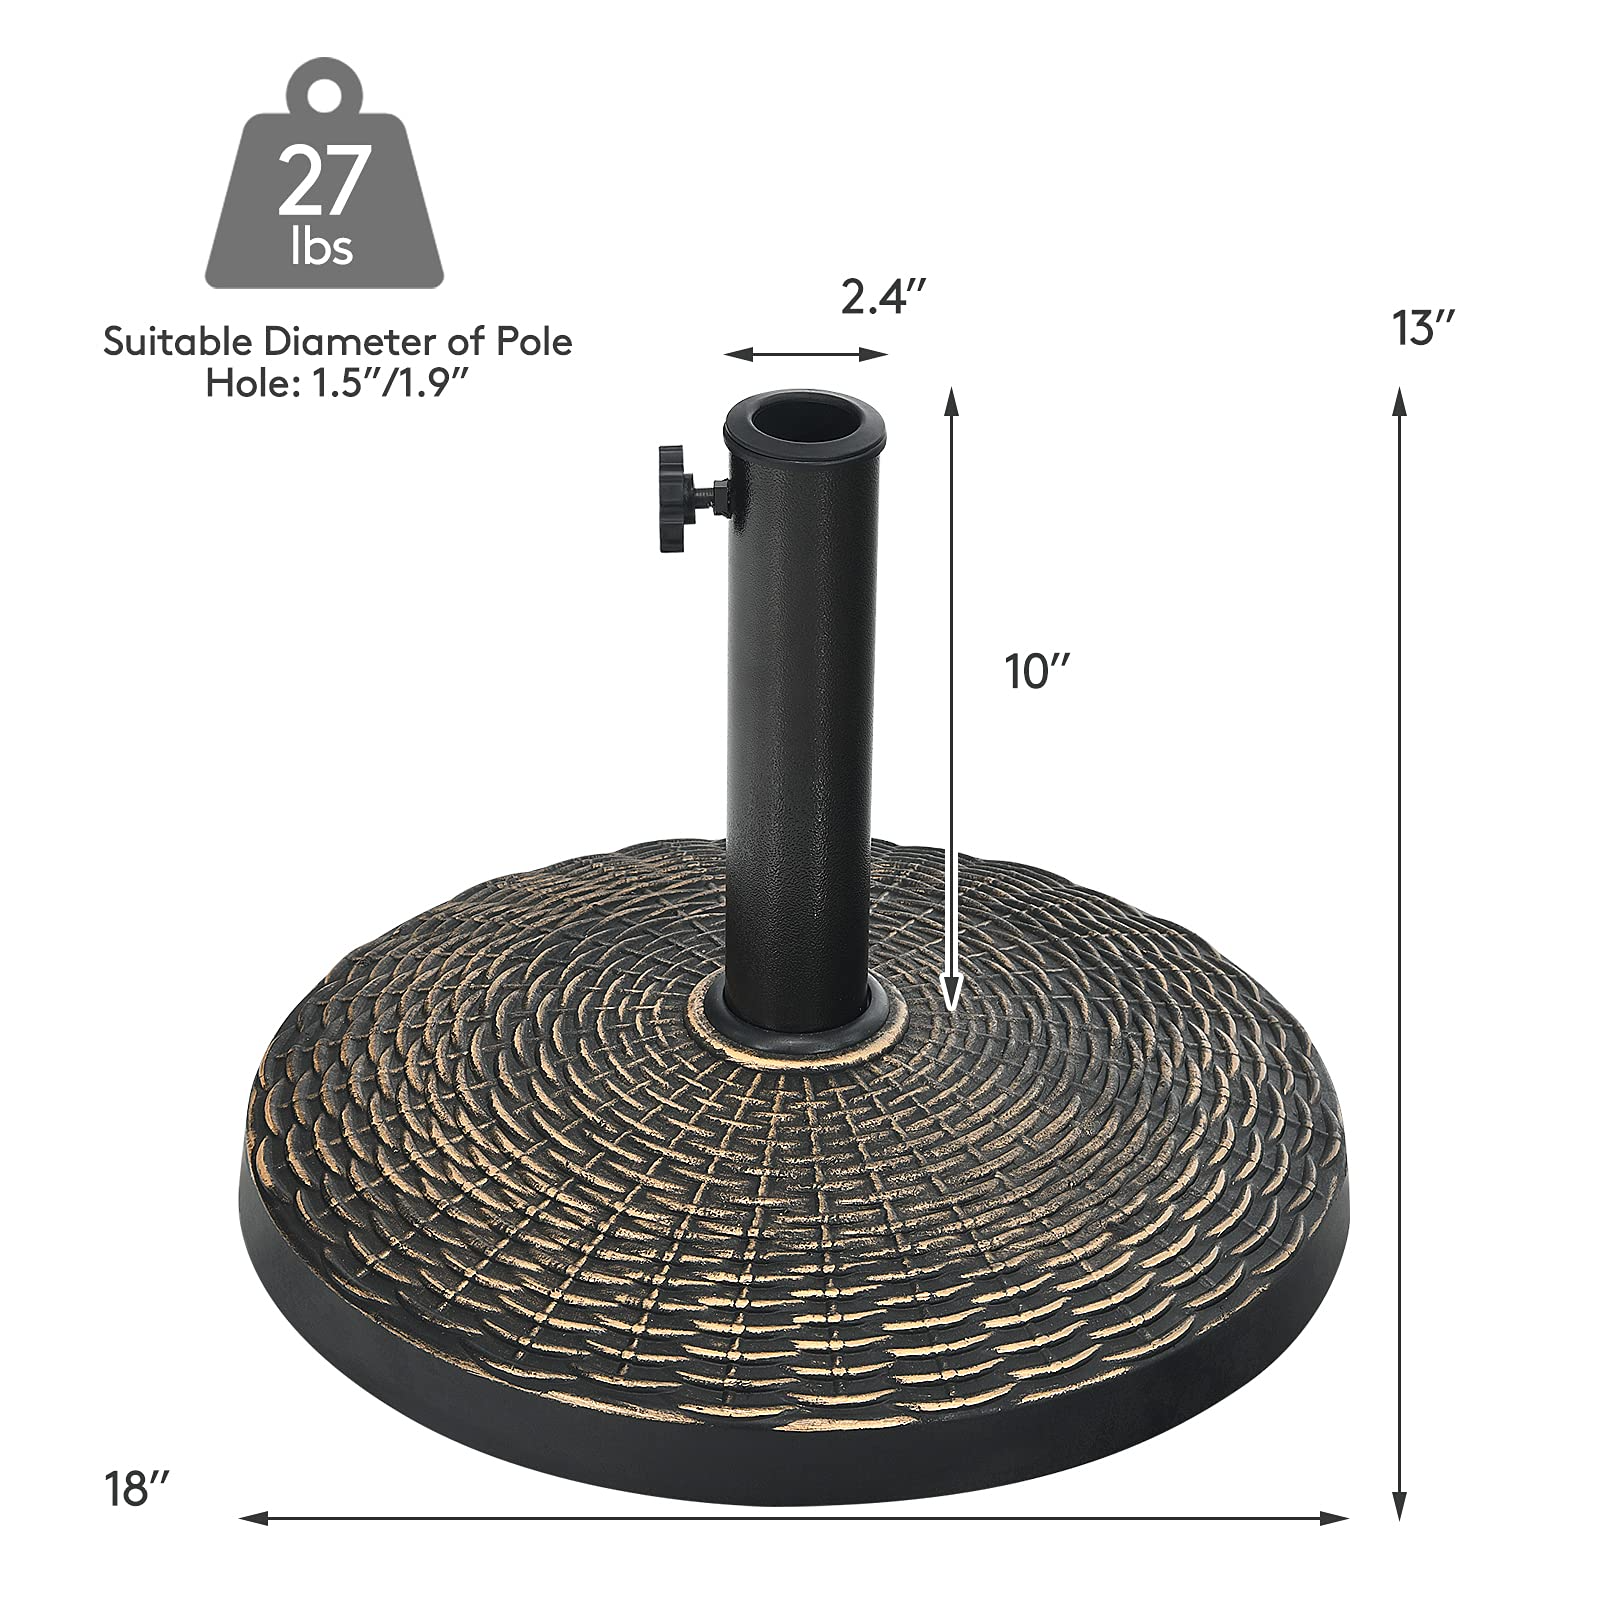 Giantex Round Patio Umbrella Base for 1.5" or 1.9" Diameter Pole, 27 lbs Heavy-Duty Resin Outdoor Umbrella Stand